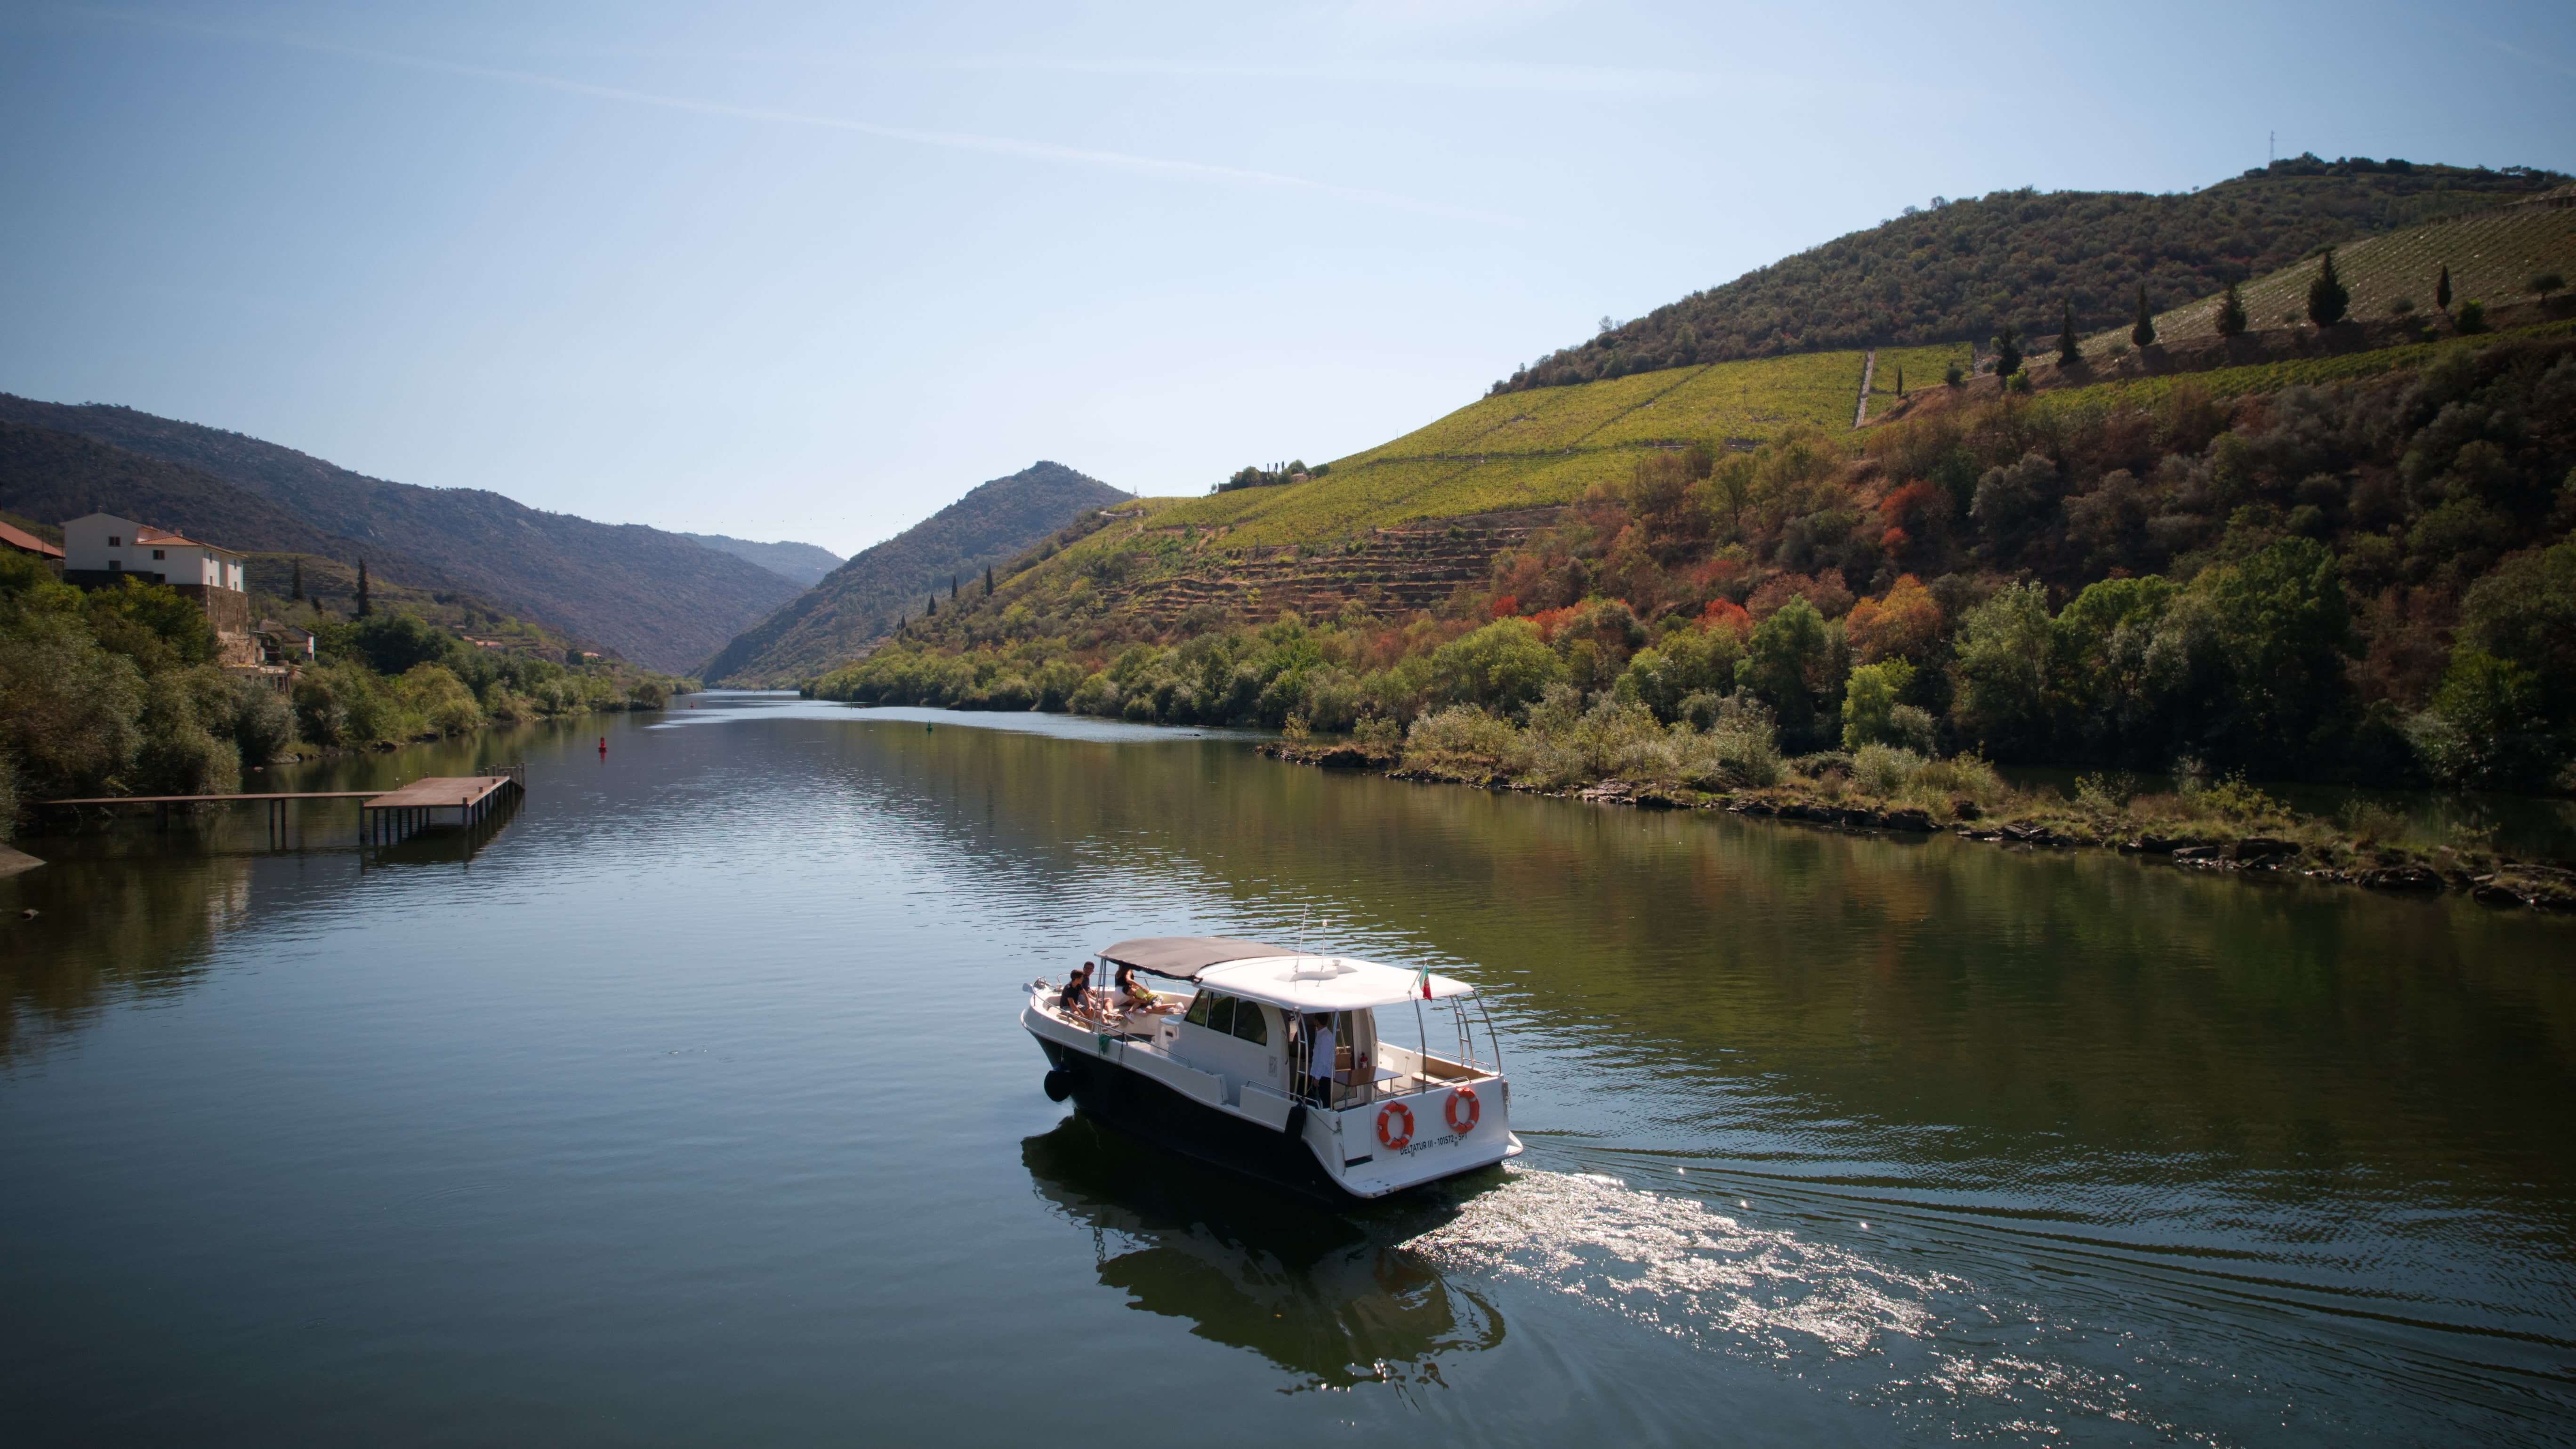 Douro River Cruise from Pinhao to Tua - Portugal